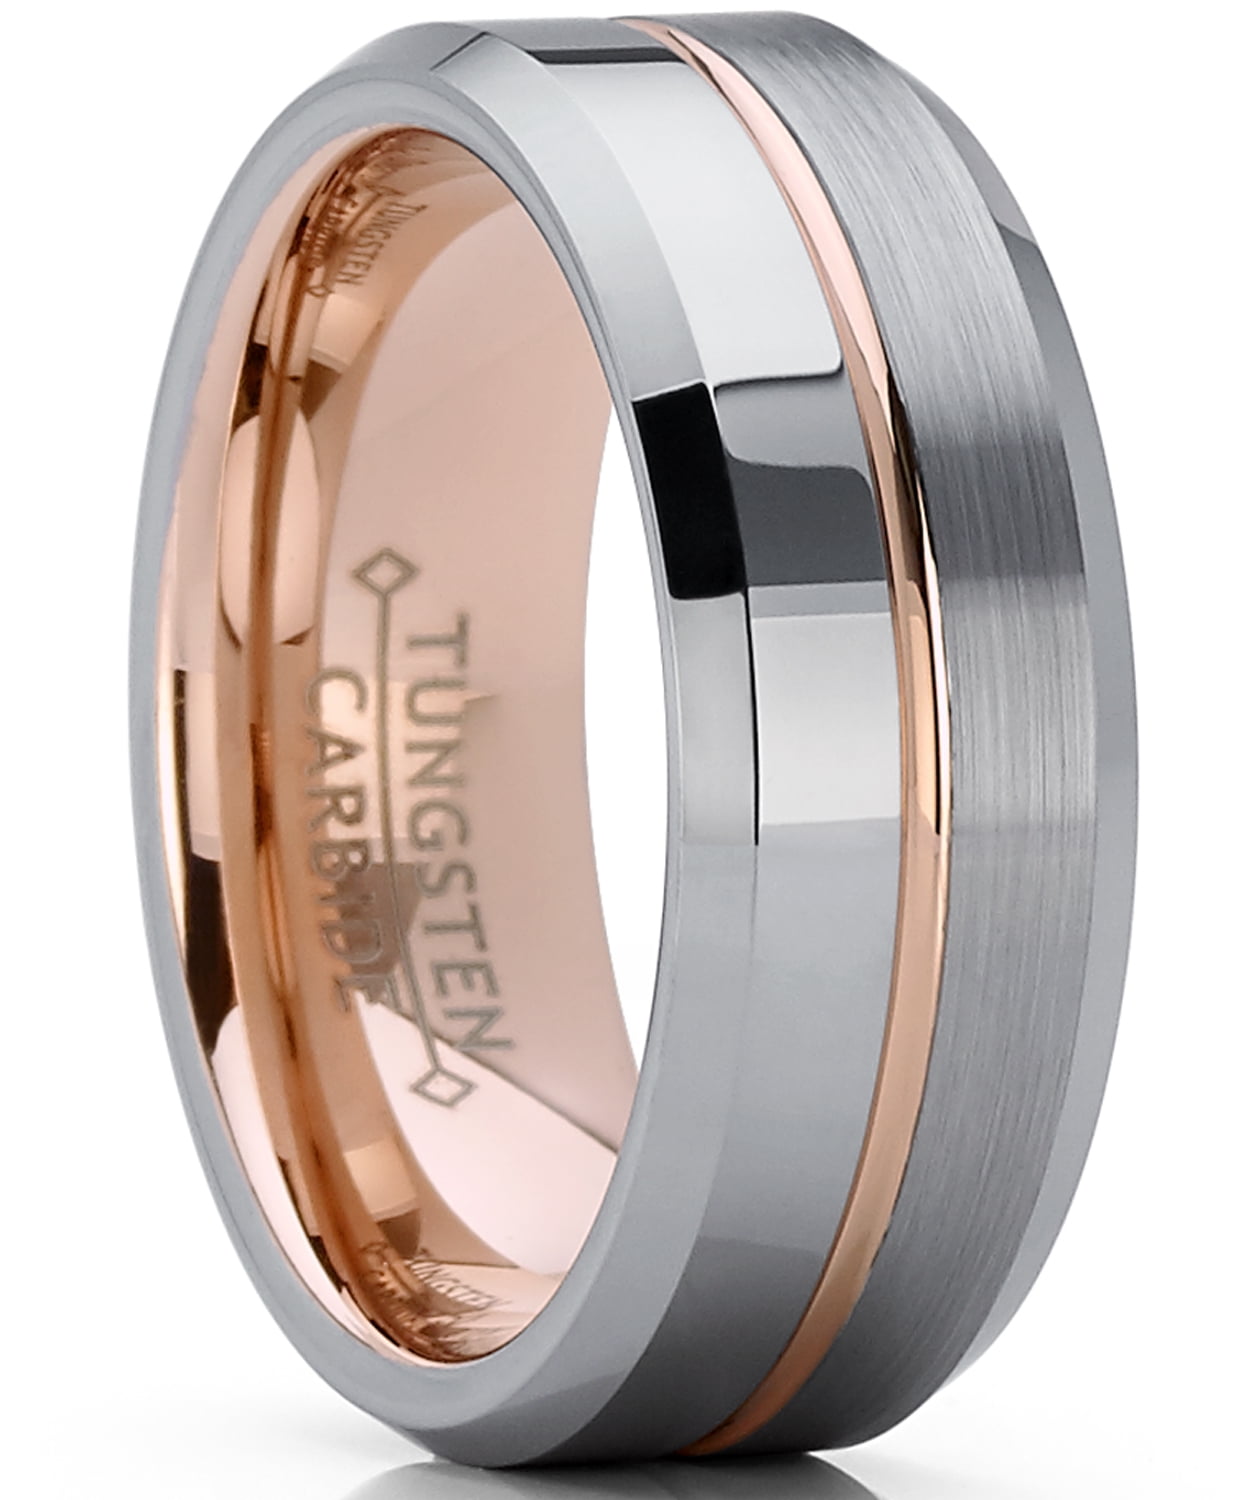 Half Tungsten Carbide Wedding Band Ring Black Mens Jewelry Size 7-13